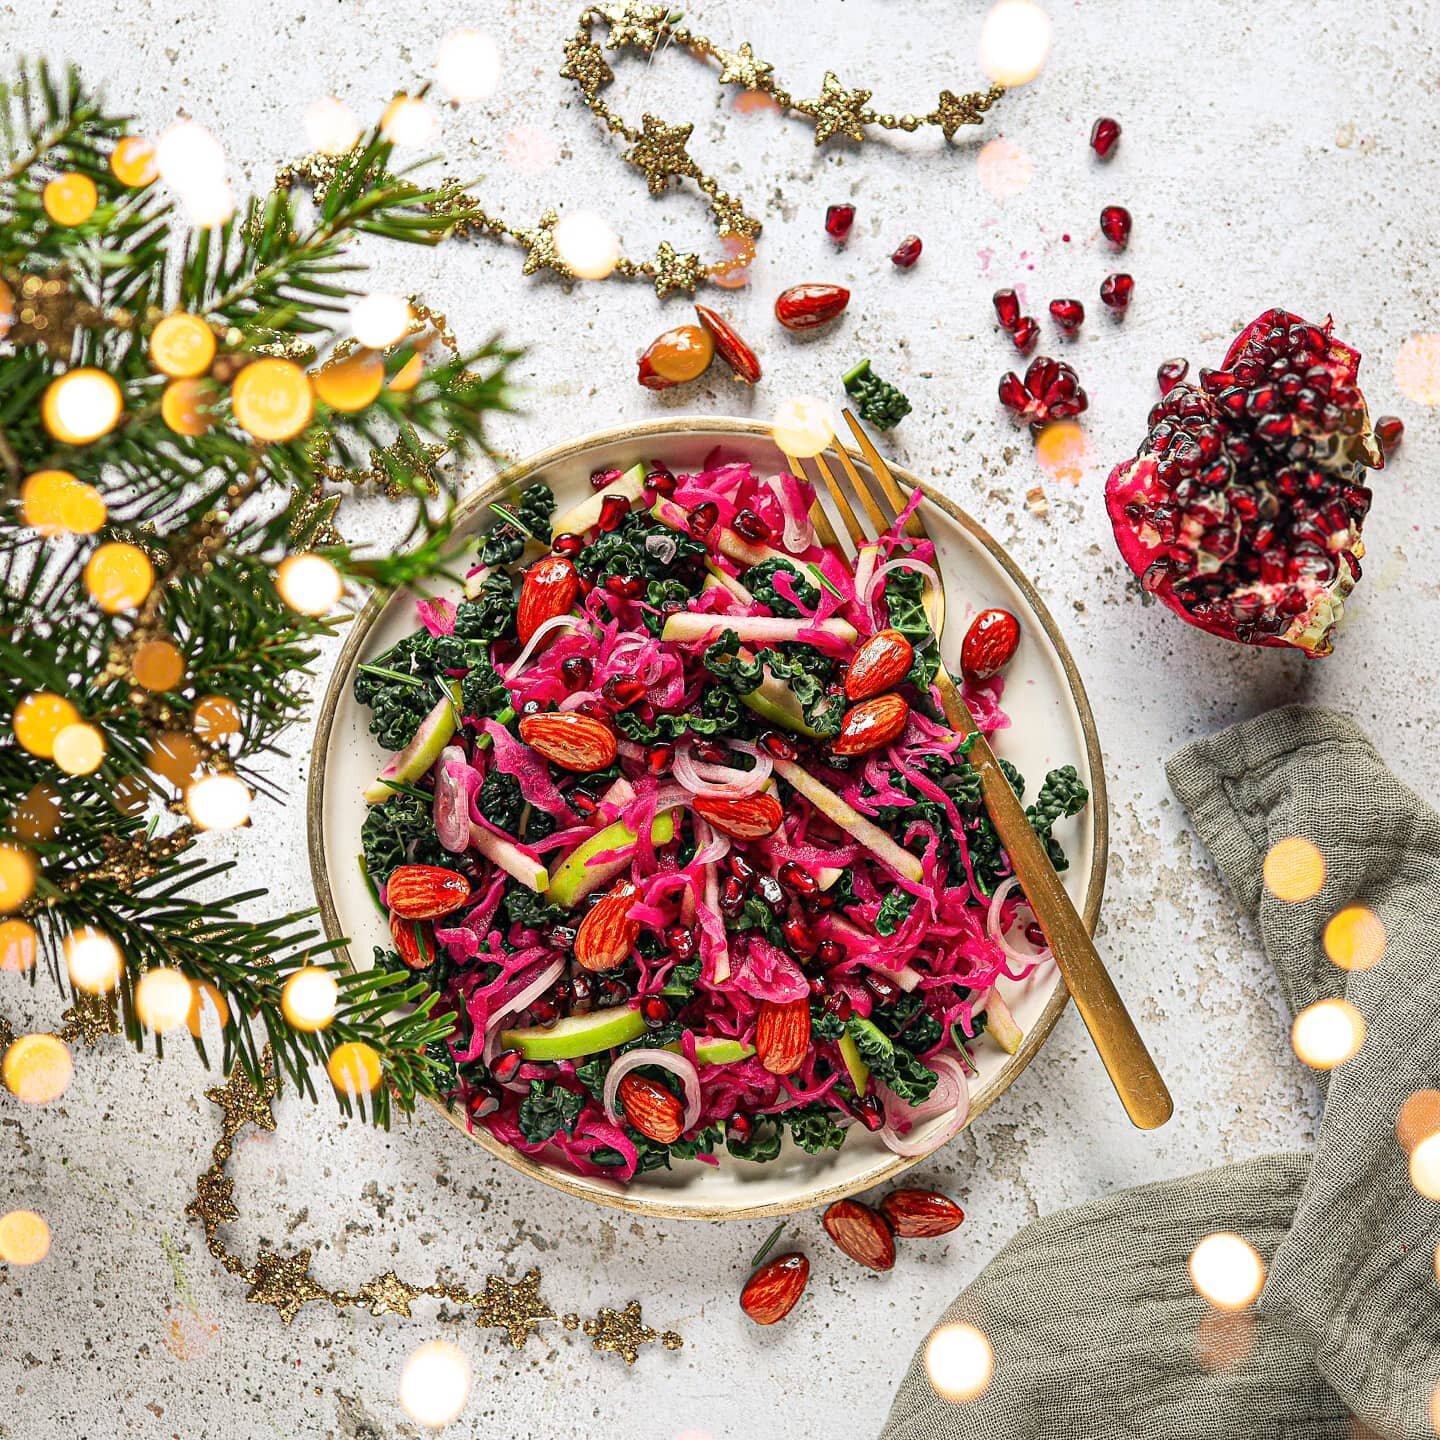 'Tis the season for a festive Ruby Red Sauerkraut salad! 

#sauerkraut #christmasfood #fermentedfoods #guthealth #microbiome #xmasfood #healthygut